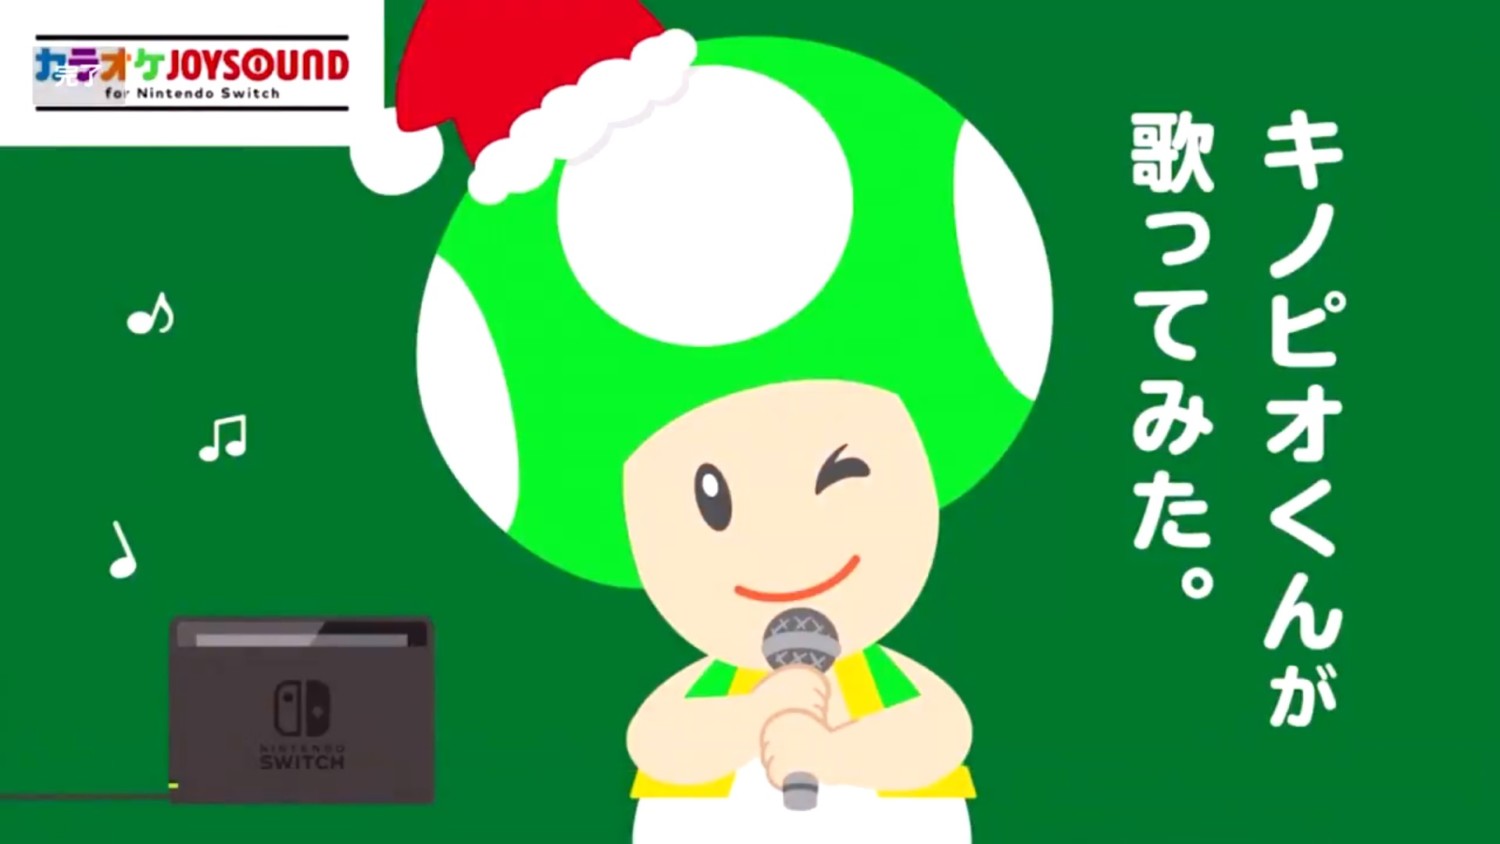 Karaoke JOYSOUND Hitting Nintendo Switch This Fall – NintendoSoup